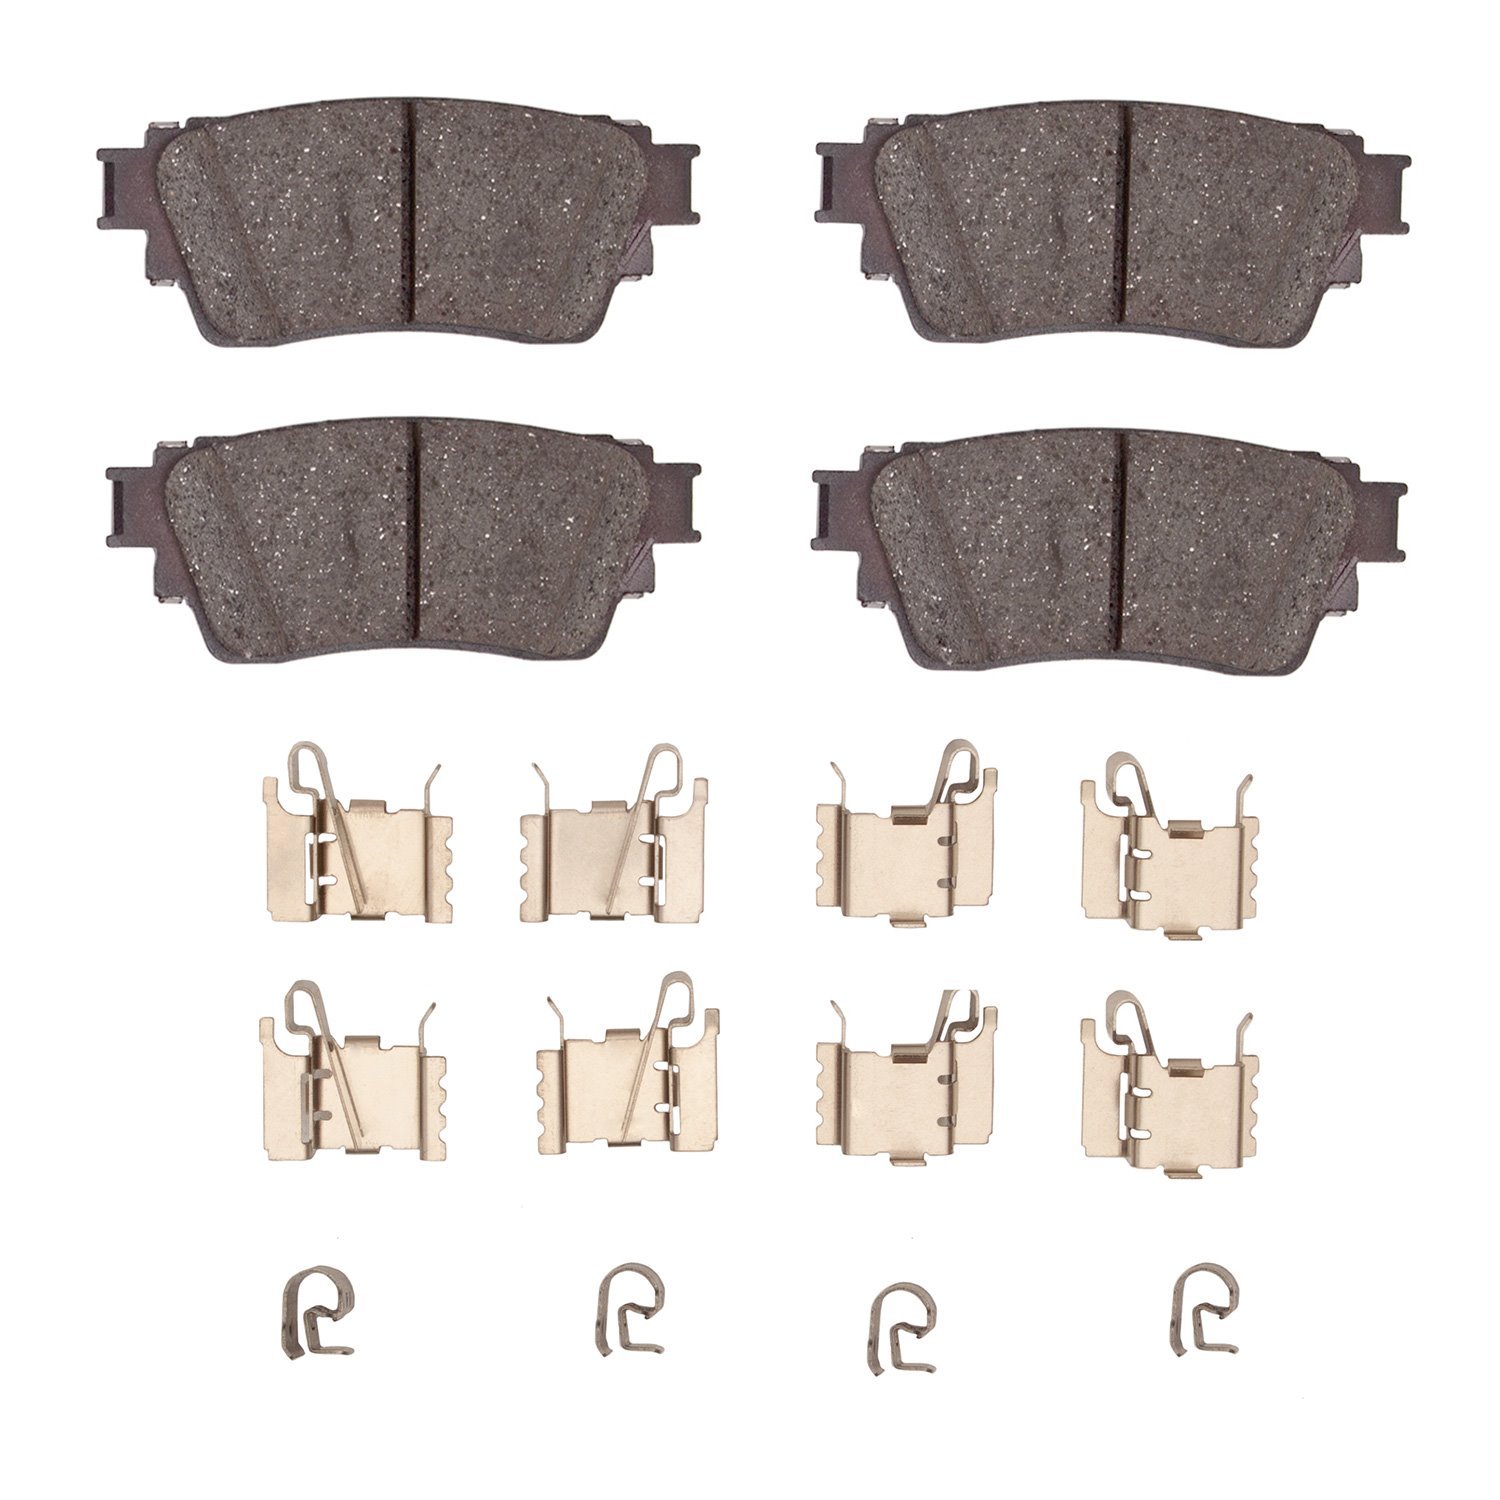 1551-2200-01 5000 Advanced Ceramic Brake Pads & Hardware Kit, Fits Select Infiniti/Nissan, Position: Rear